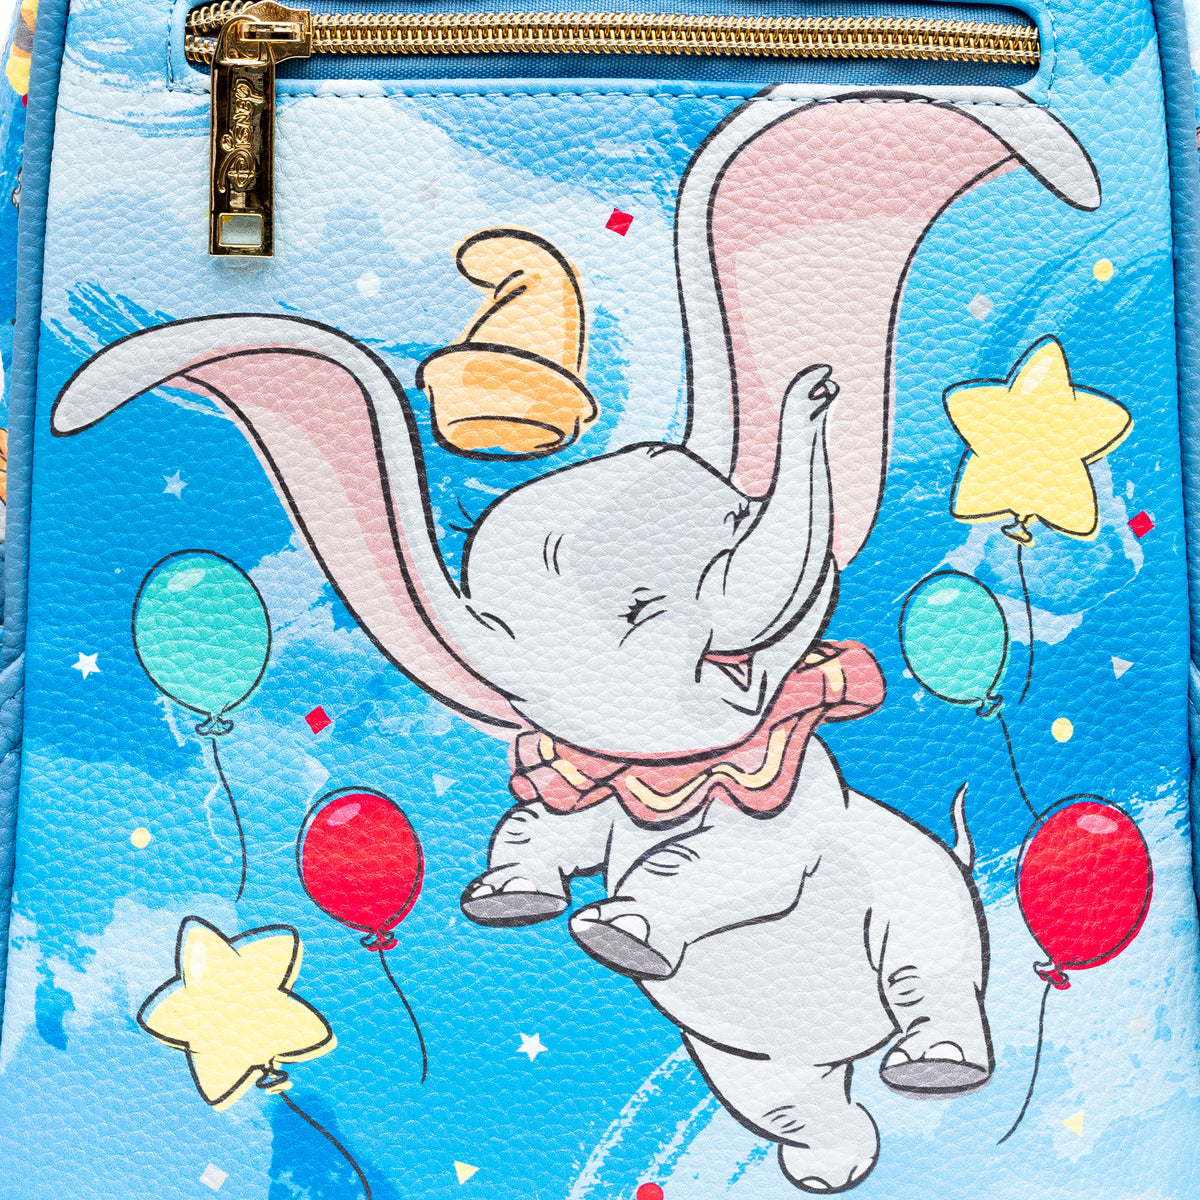 Disney Dumbo the Flying Elephant Loungefly Mini Backpack